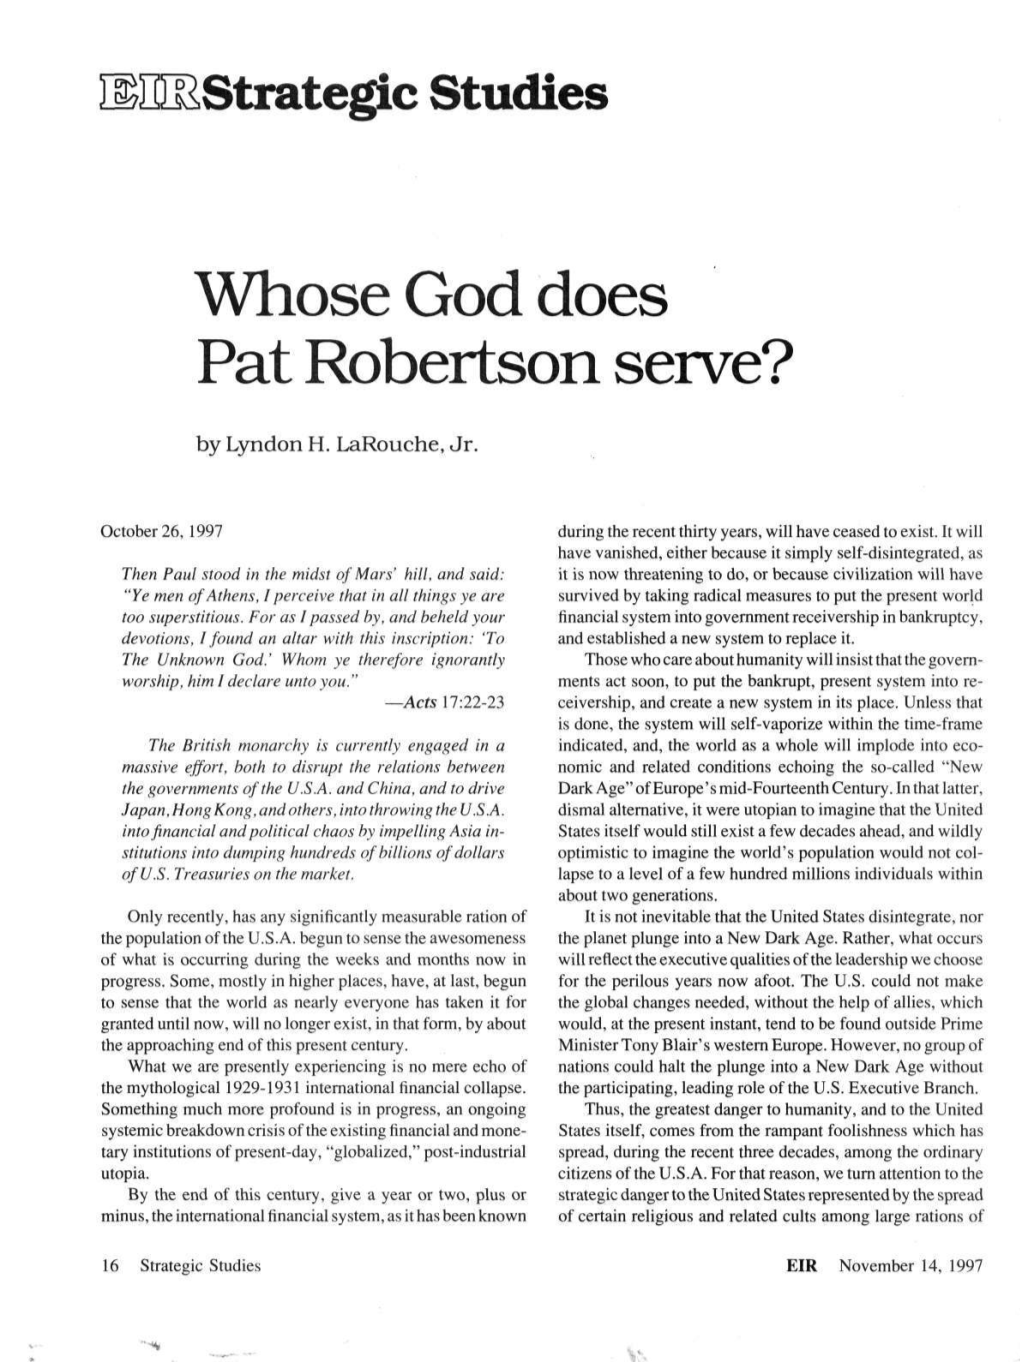 Whose God Does Pat Robertson Serve?